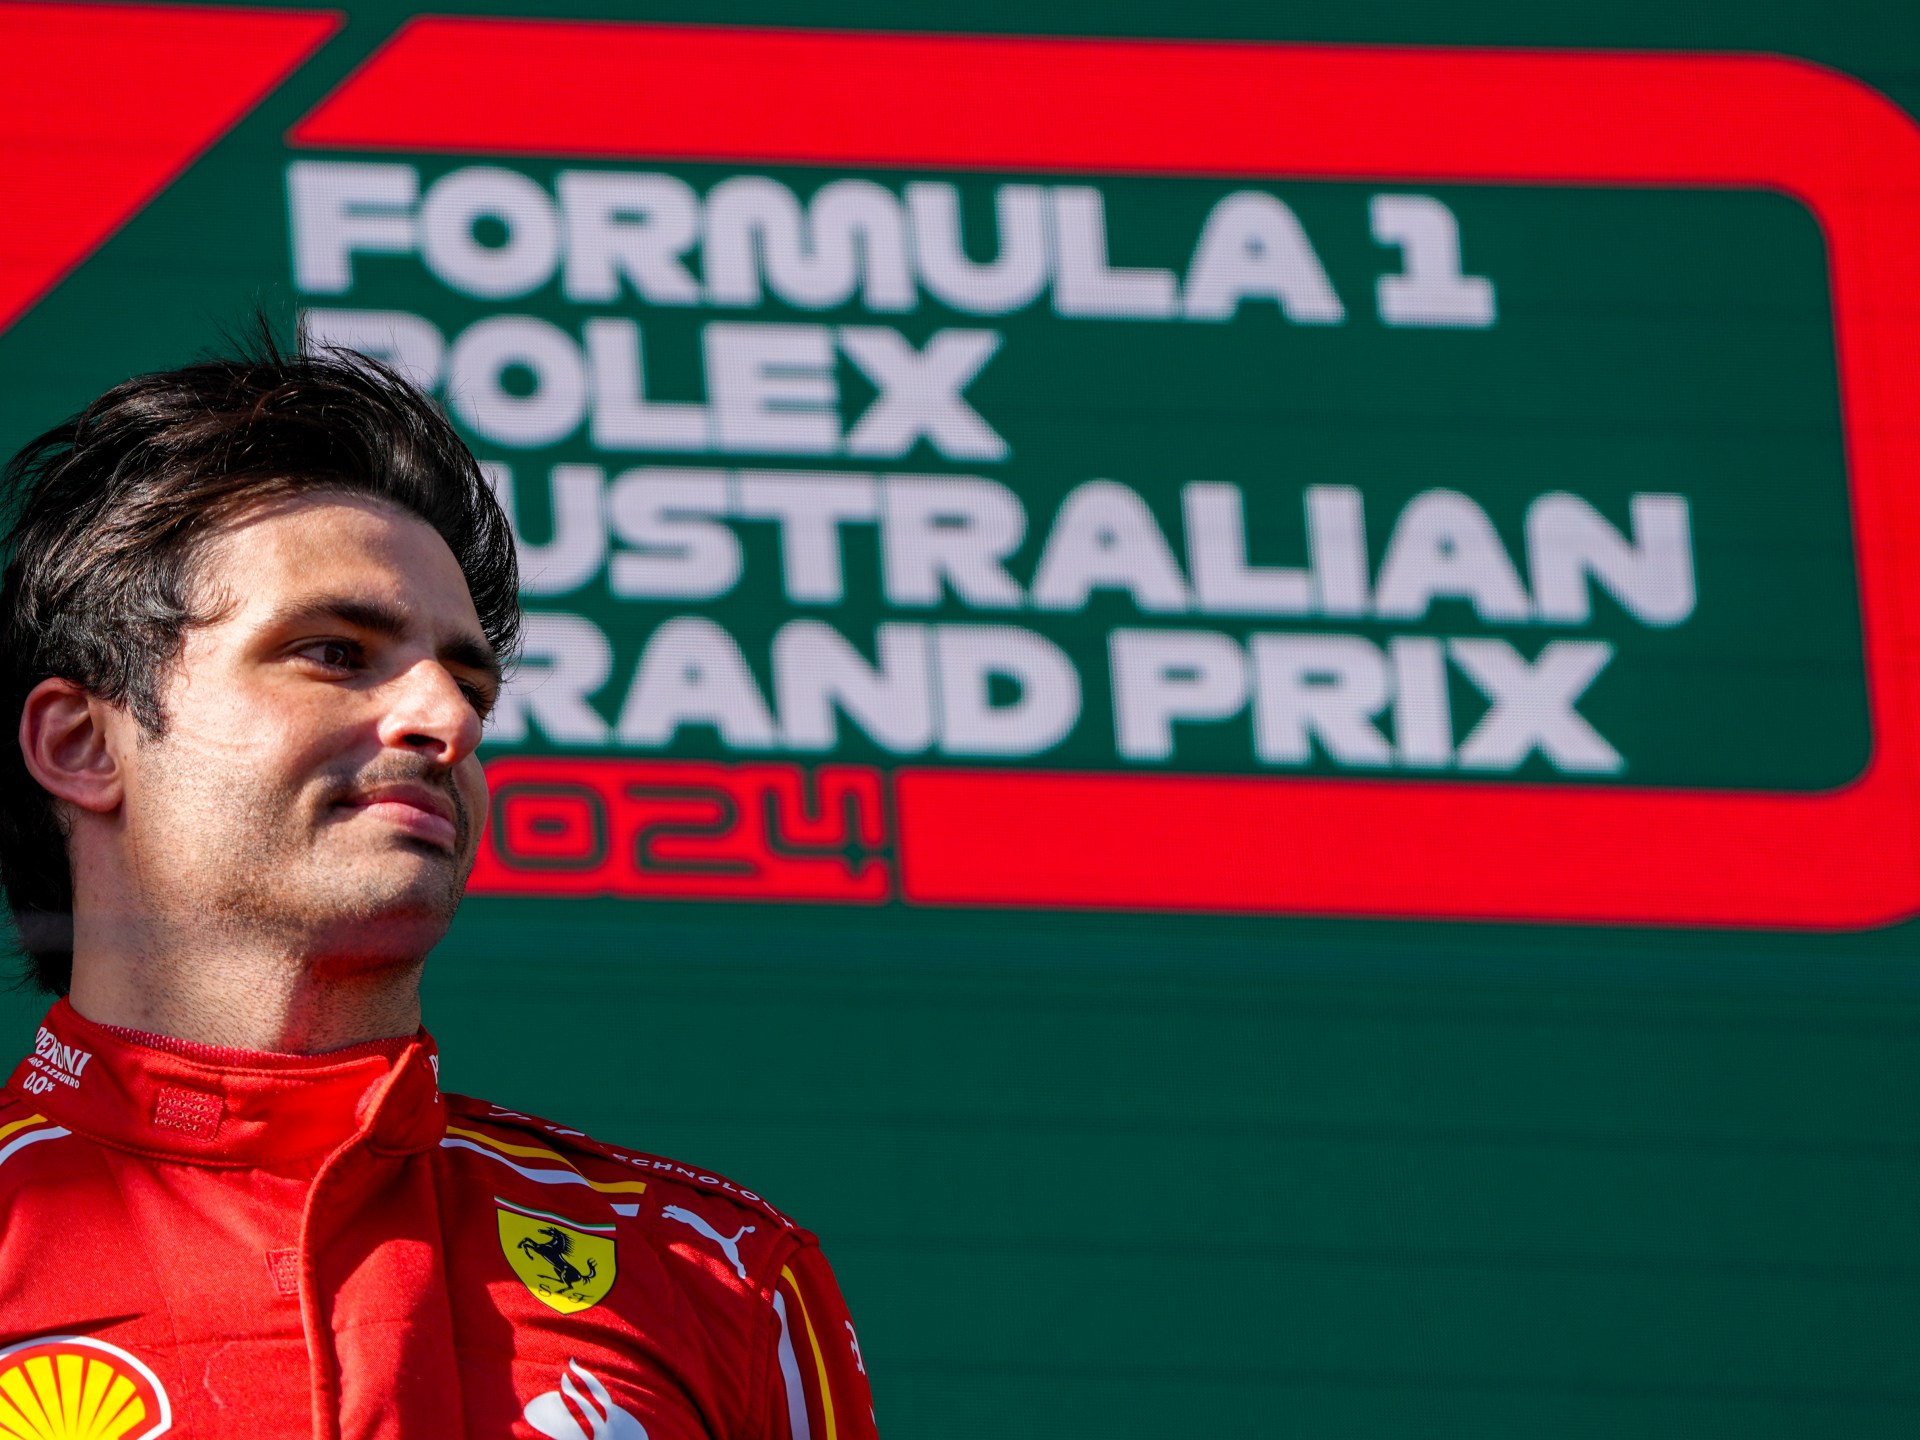 Ferrari’s Carlos Sainz wins F1 Australian GP after Verstappen retires | Motorsports News